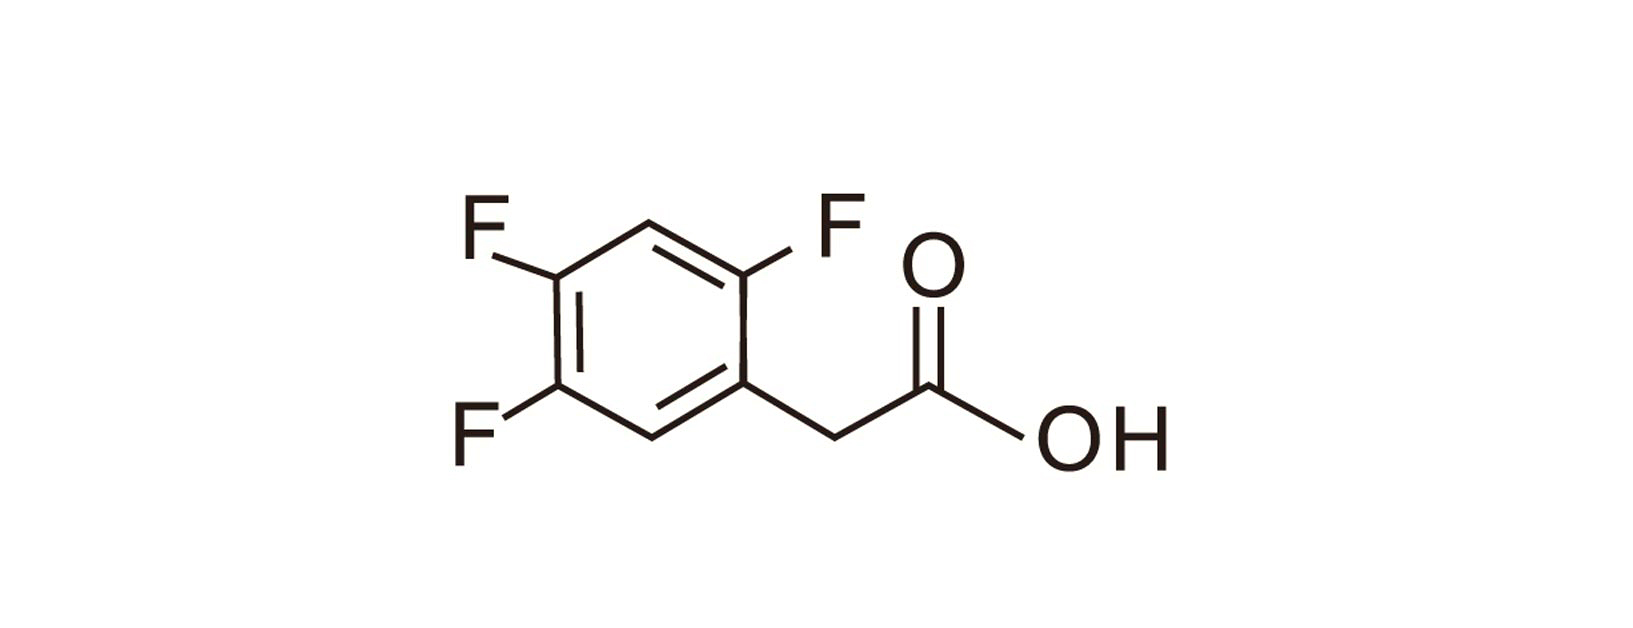 2,4,5-Trifluorophenylacetic acid(Sitagliptin)